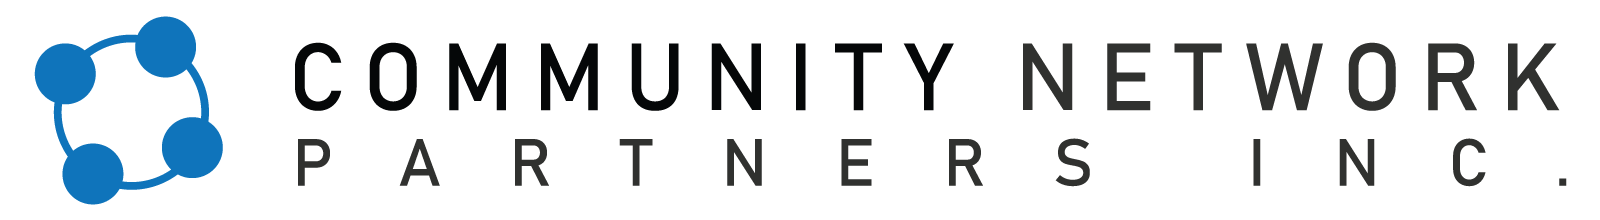 Community Network Partners Canada logo